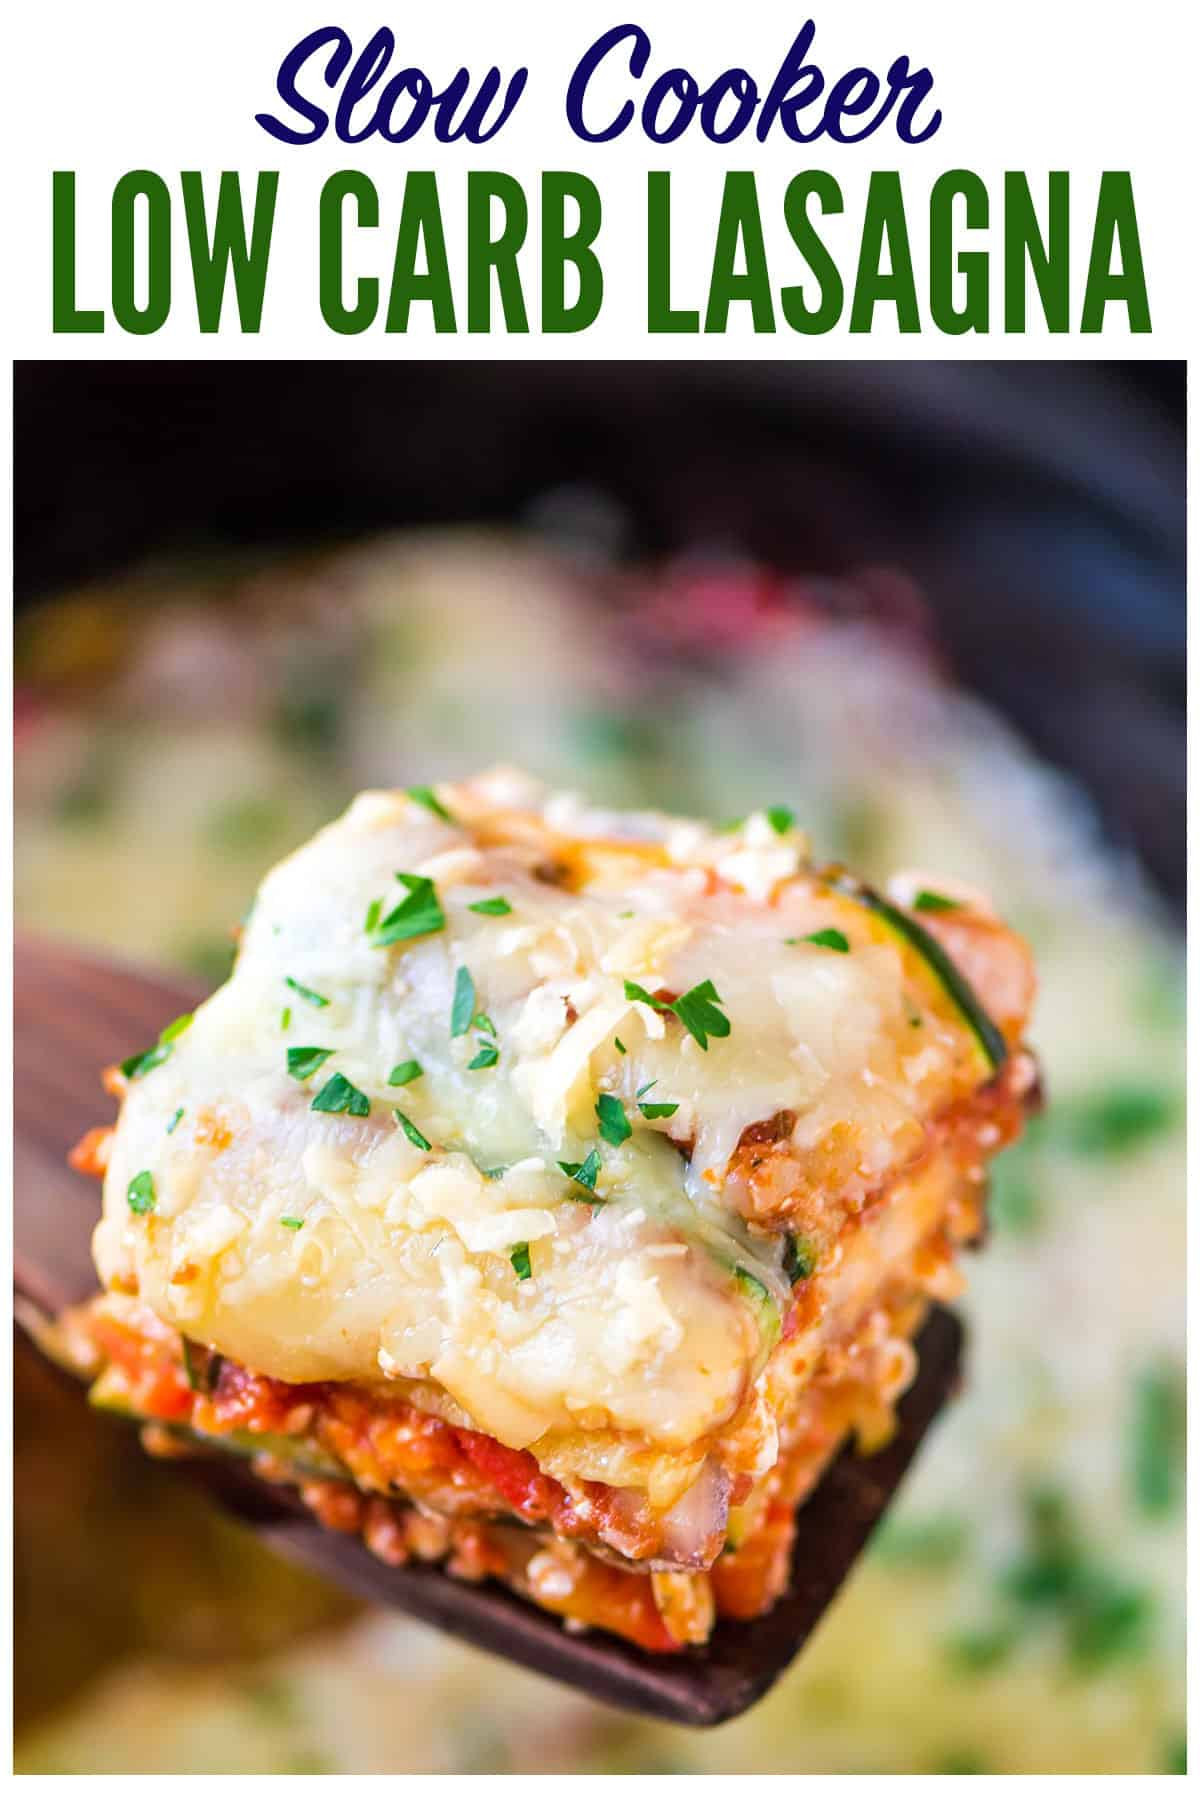 Crockpot Low Calorie Recipes
 Crock Pot Low Carb Lasagna Recipe